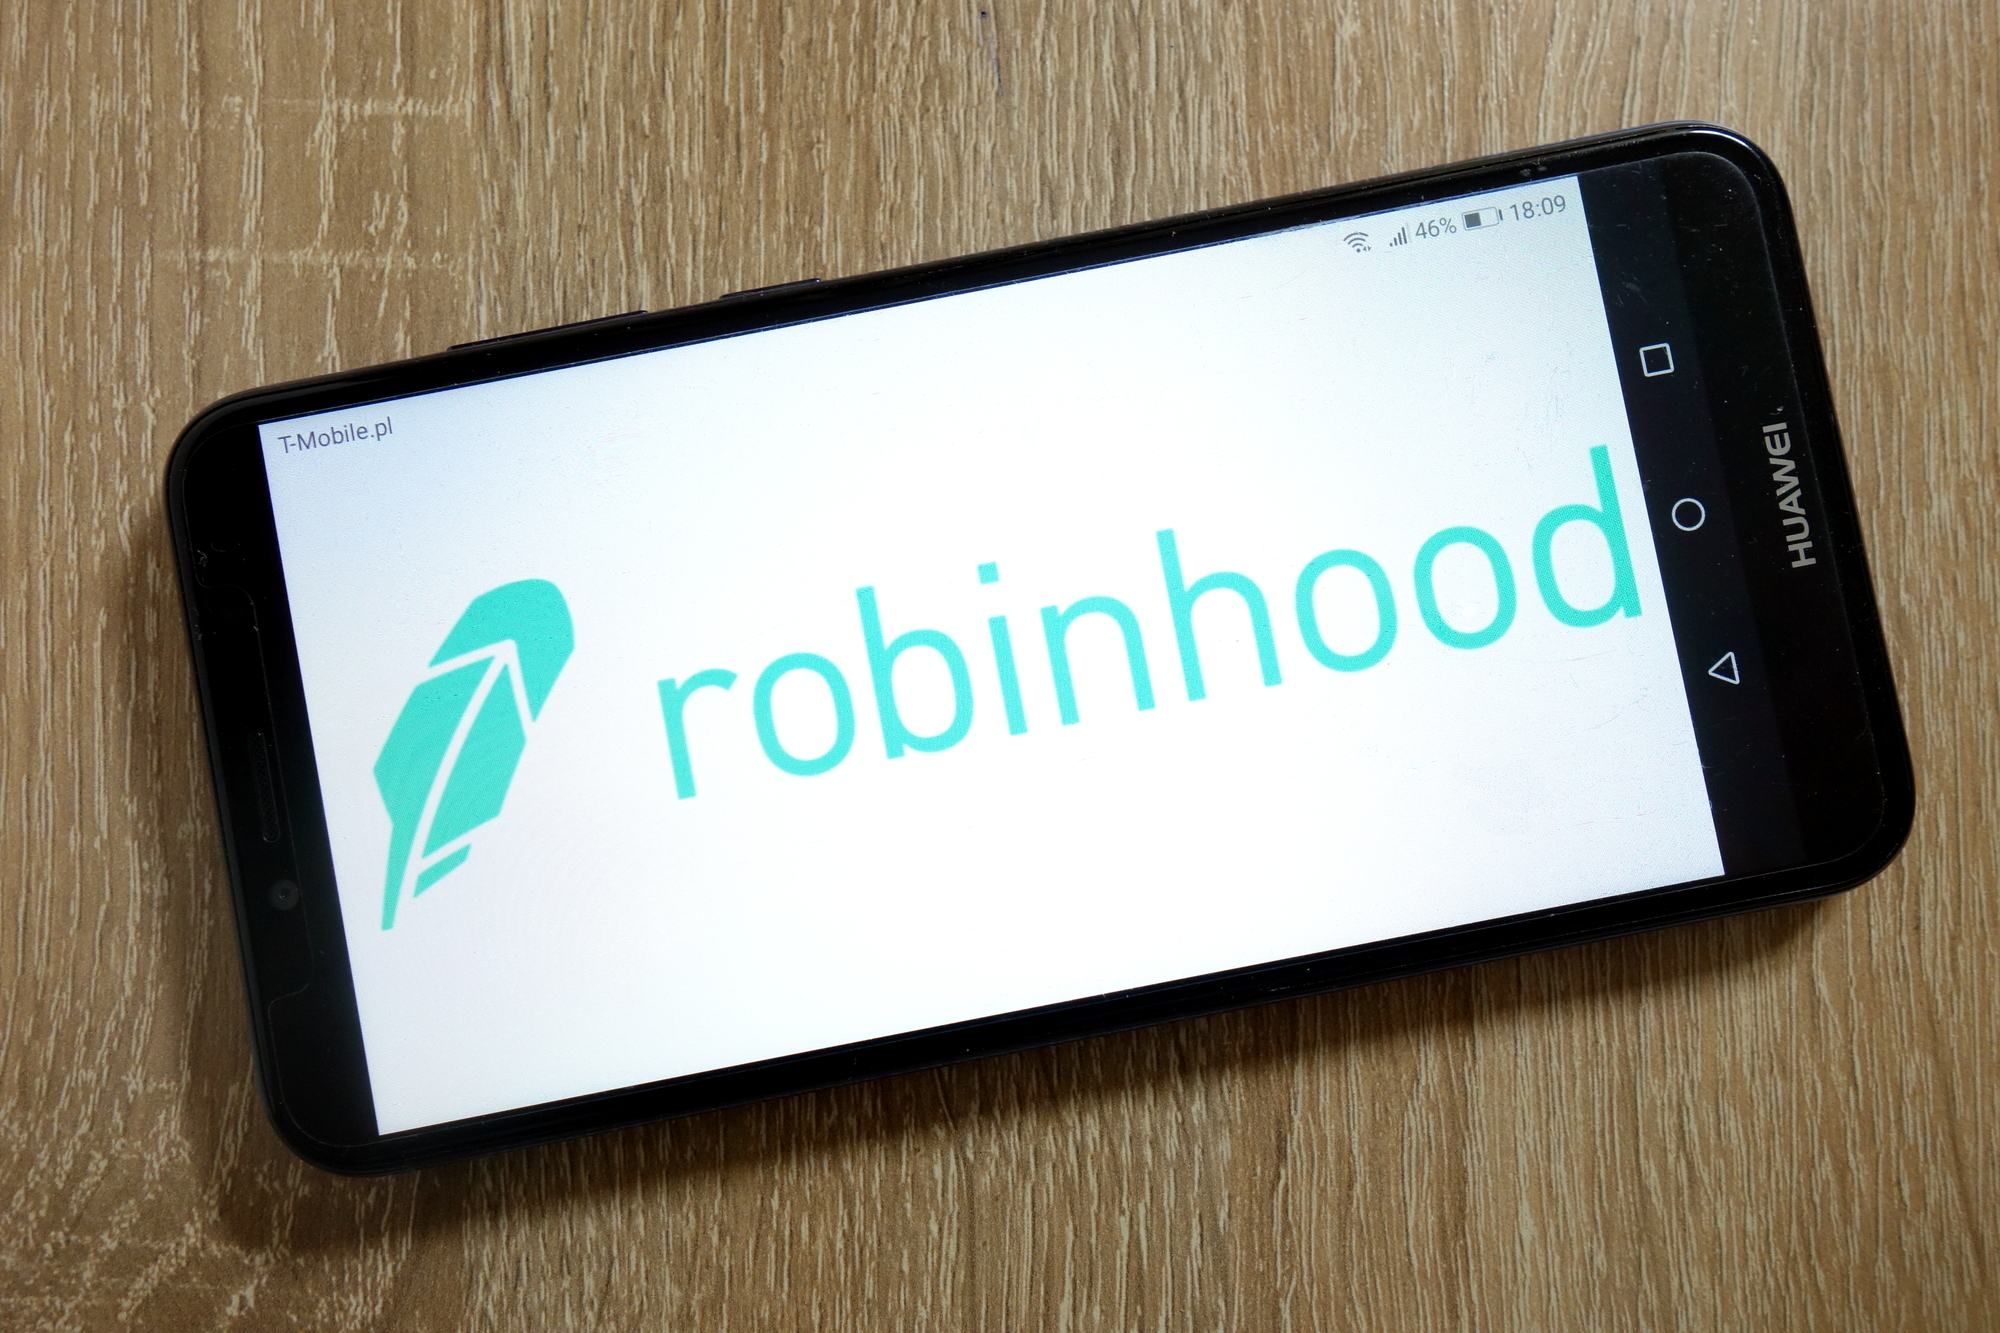 Robinhood class action lawsuit filed over GameStop stock